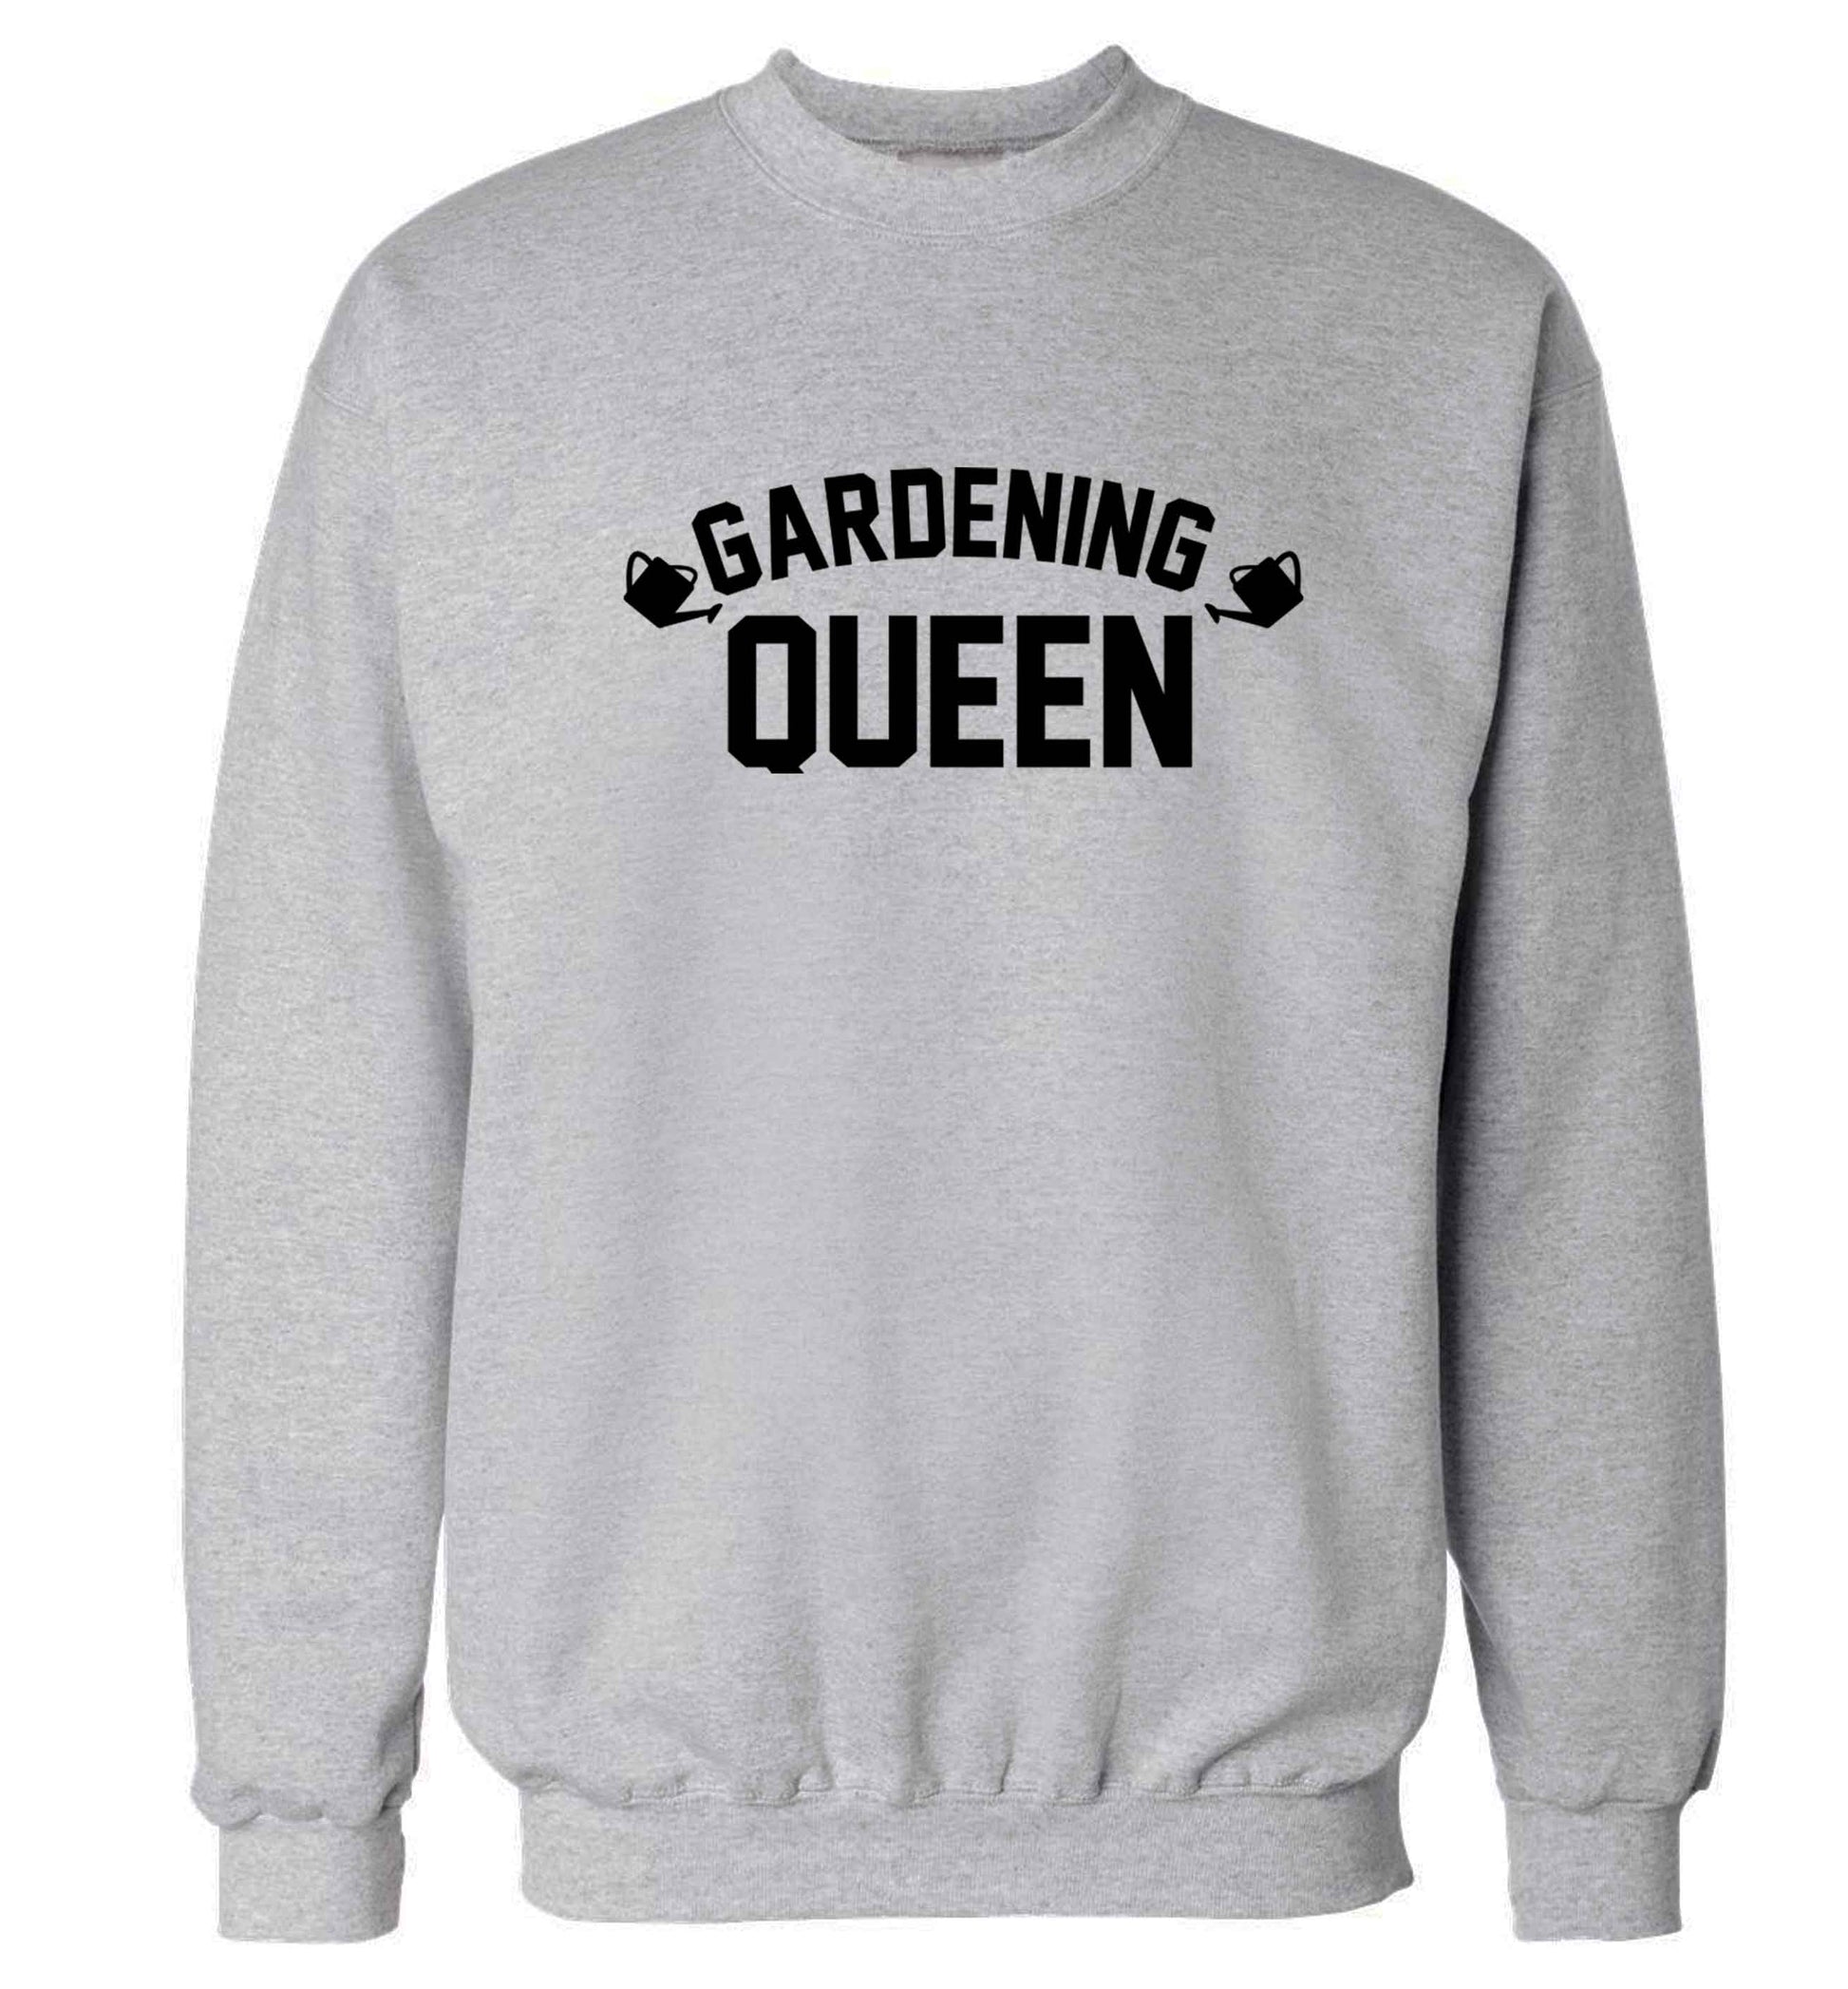 Gardening queen Adult's unisex grey Sweater 2XL